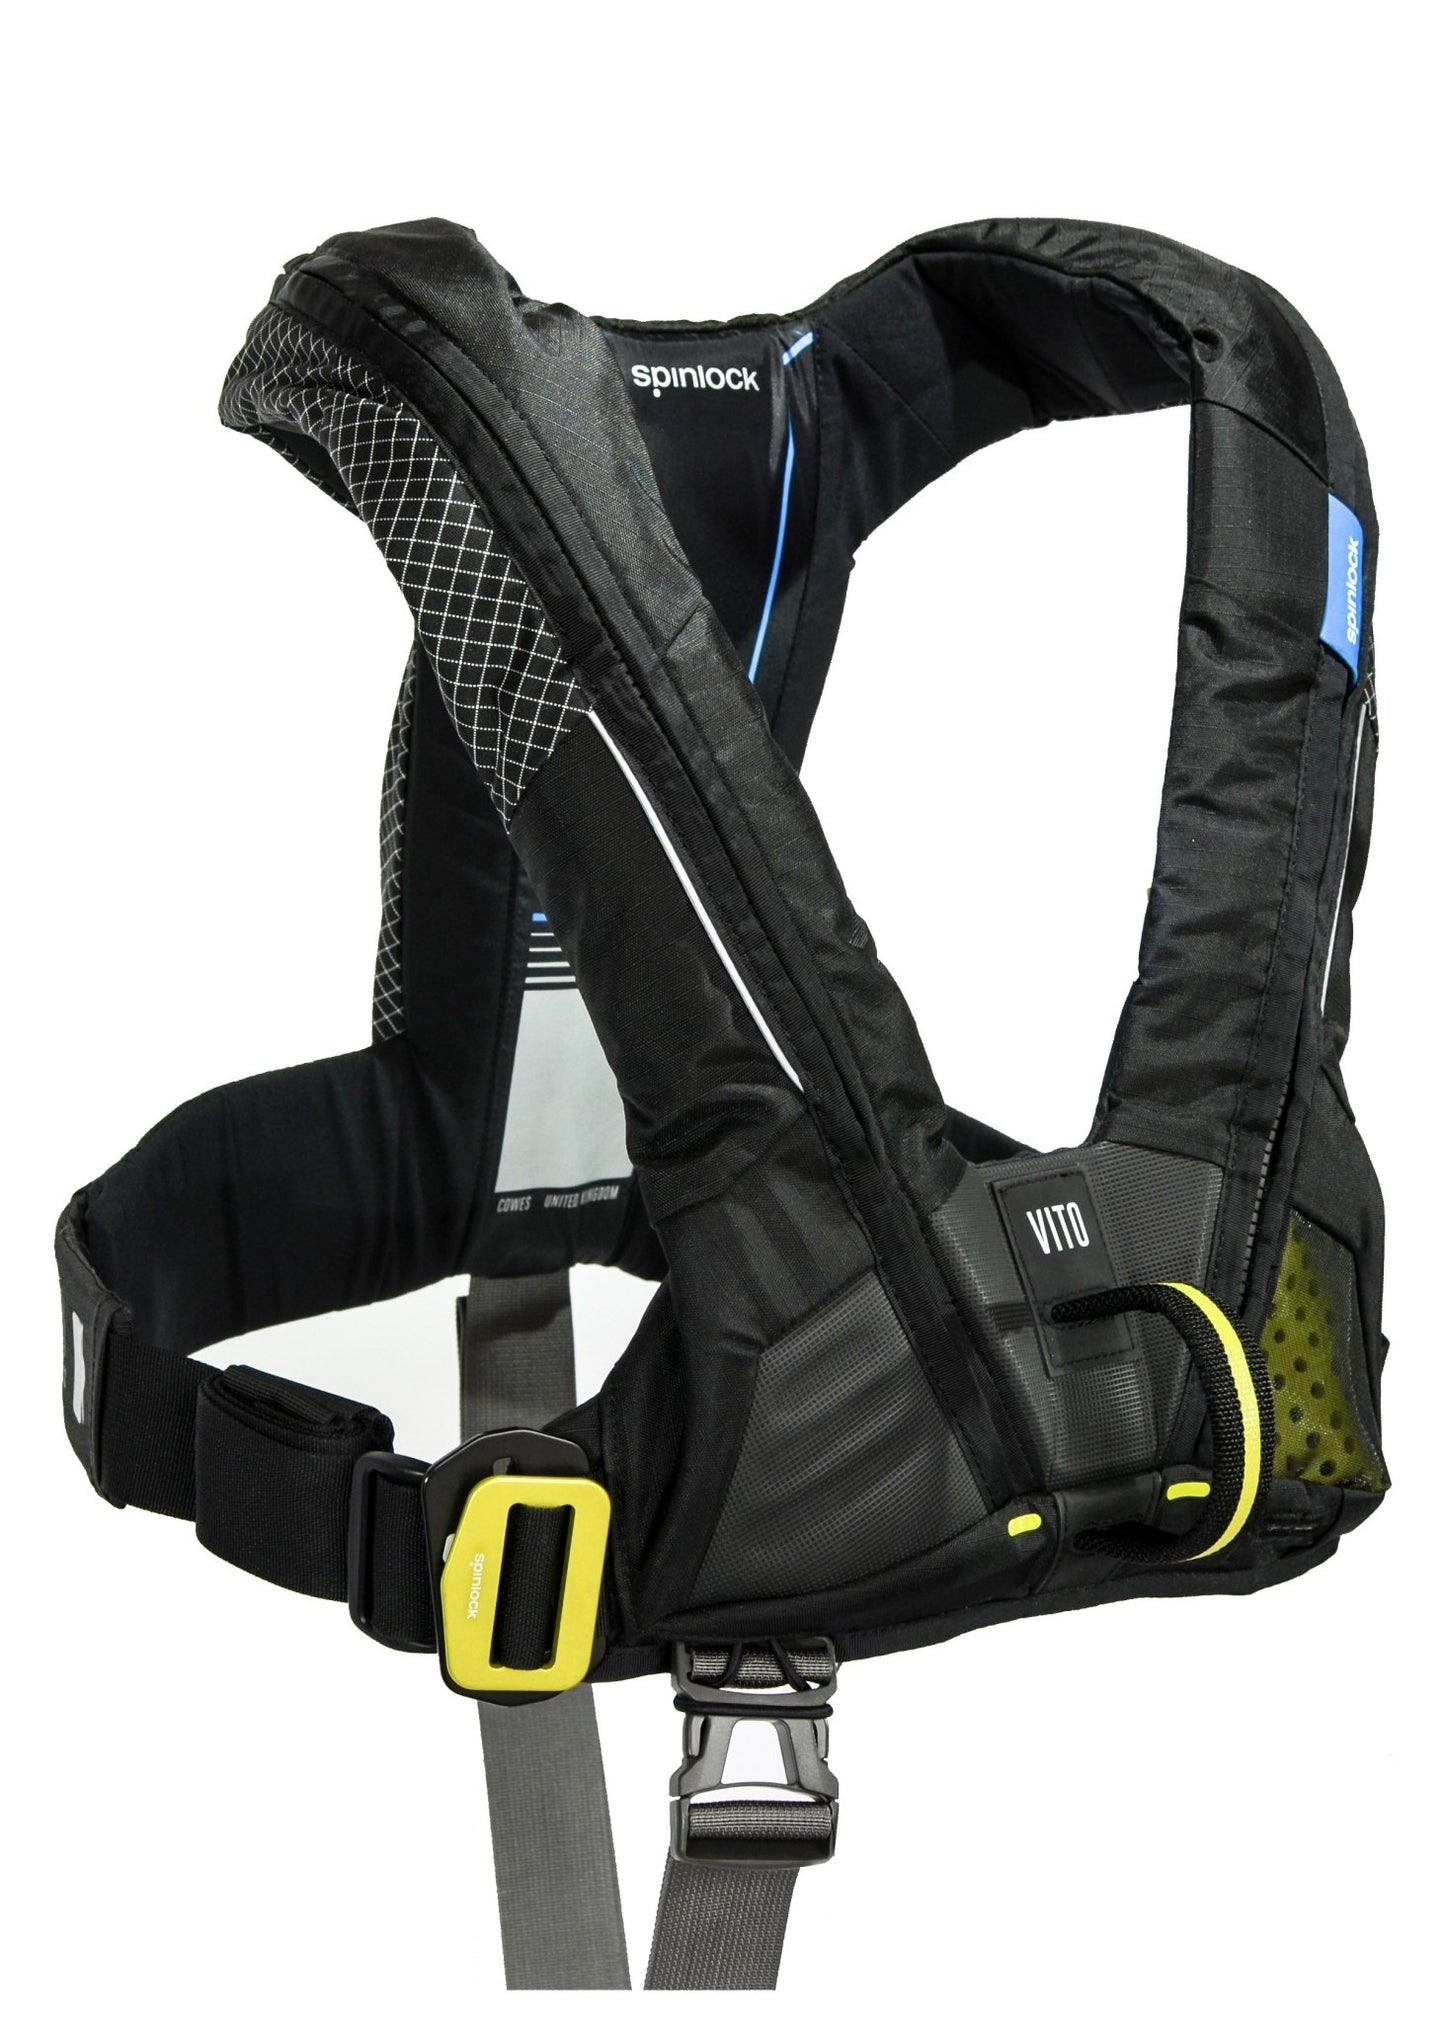 Spinlock Deckvest Vito Performance Lifejacket Harness | SendIt Sailing